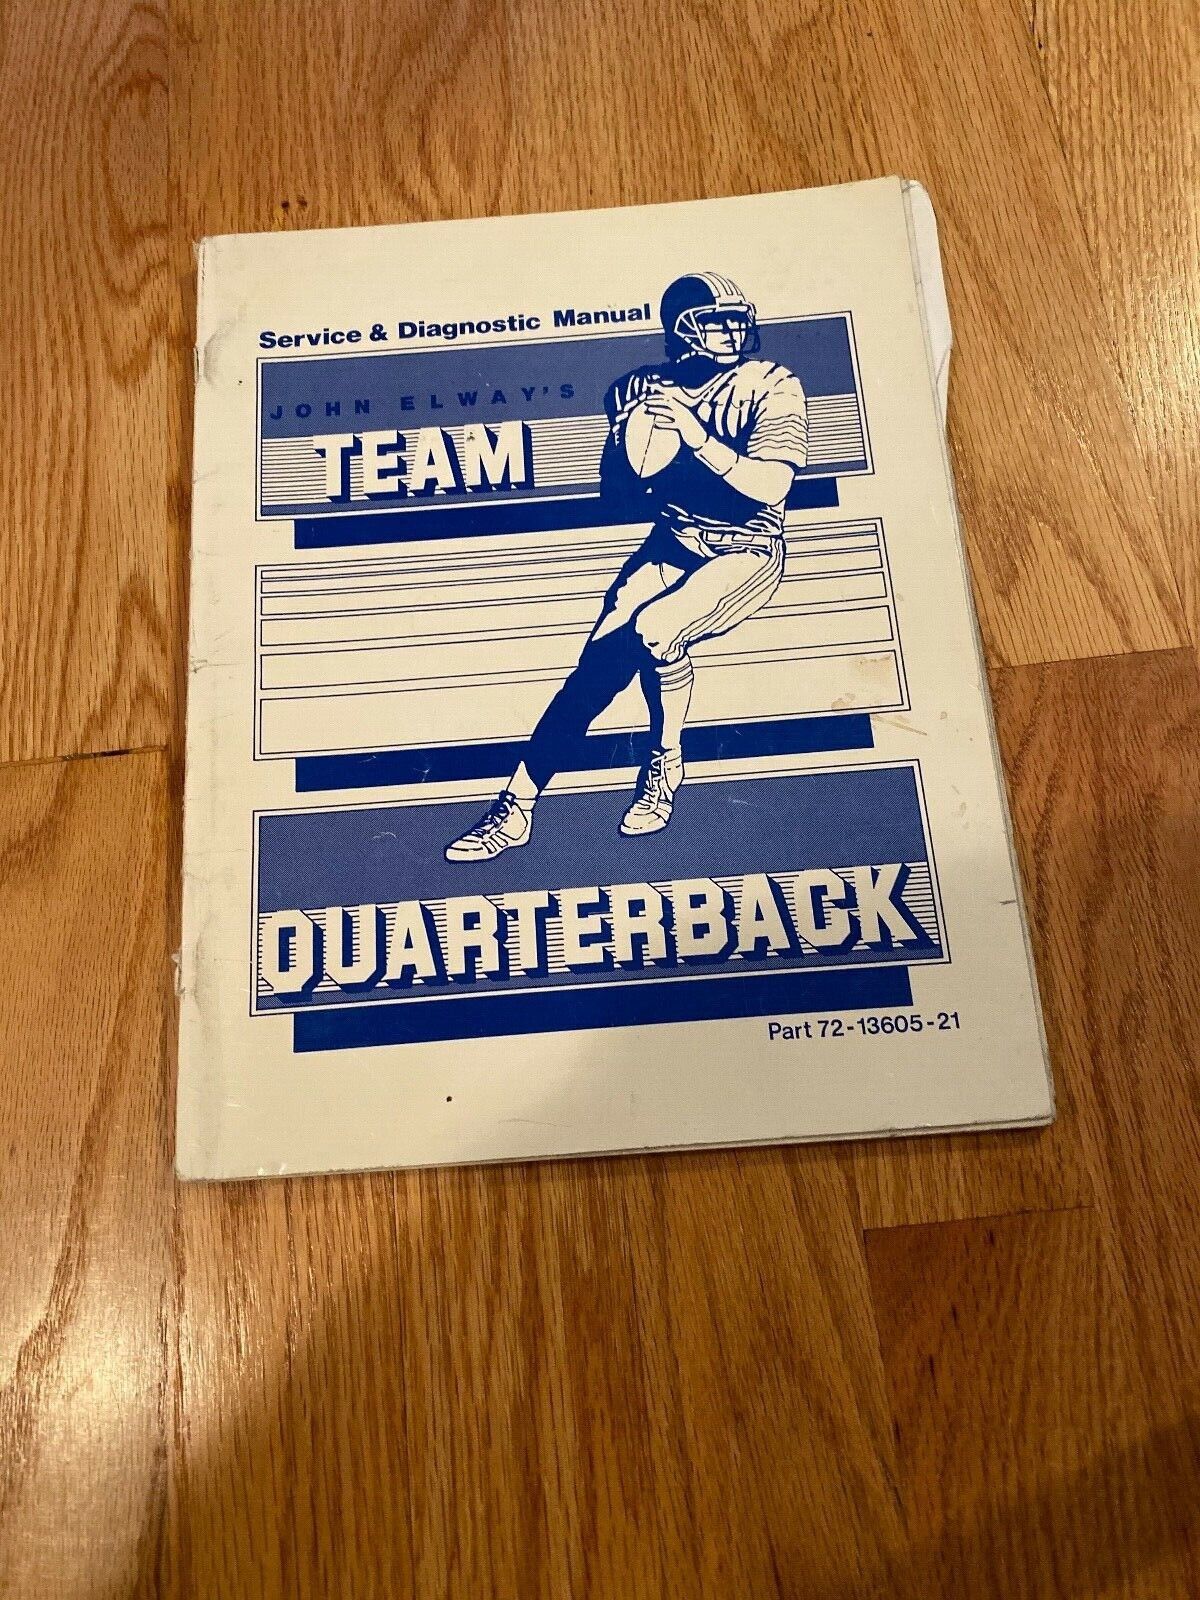 John Elway's Team Quarterback Video Arcade Game Manual, Leland 1985